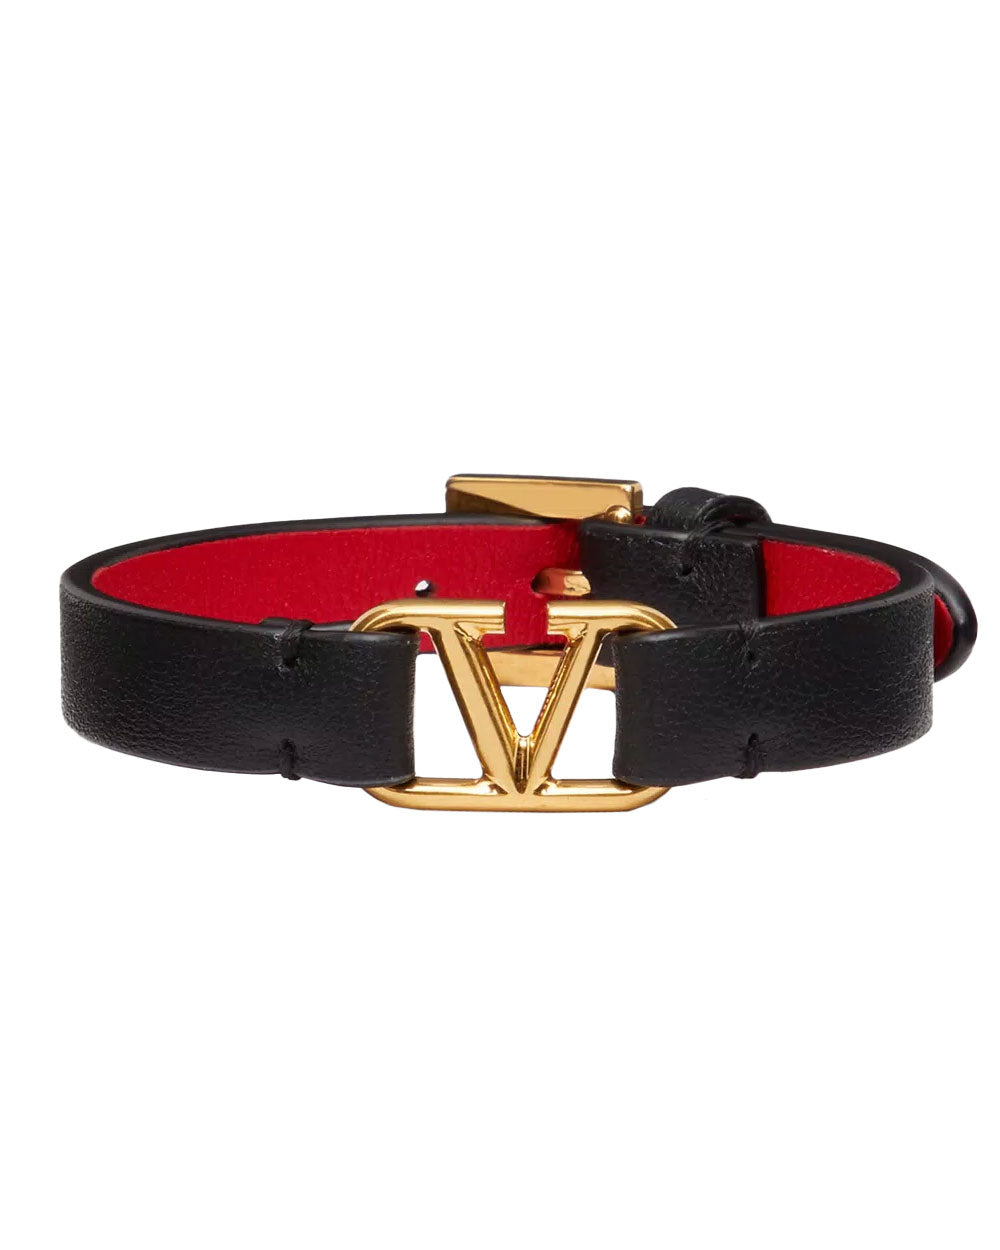 Vlogo Signature Leather Bracelet in Nero and Rouge